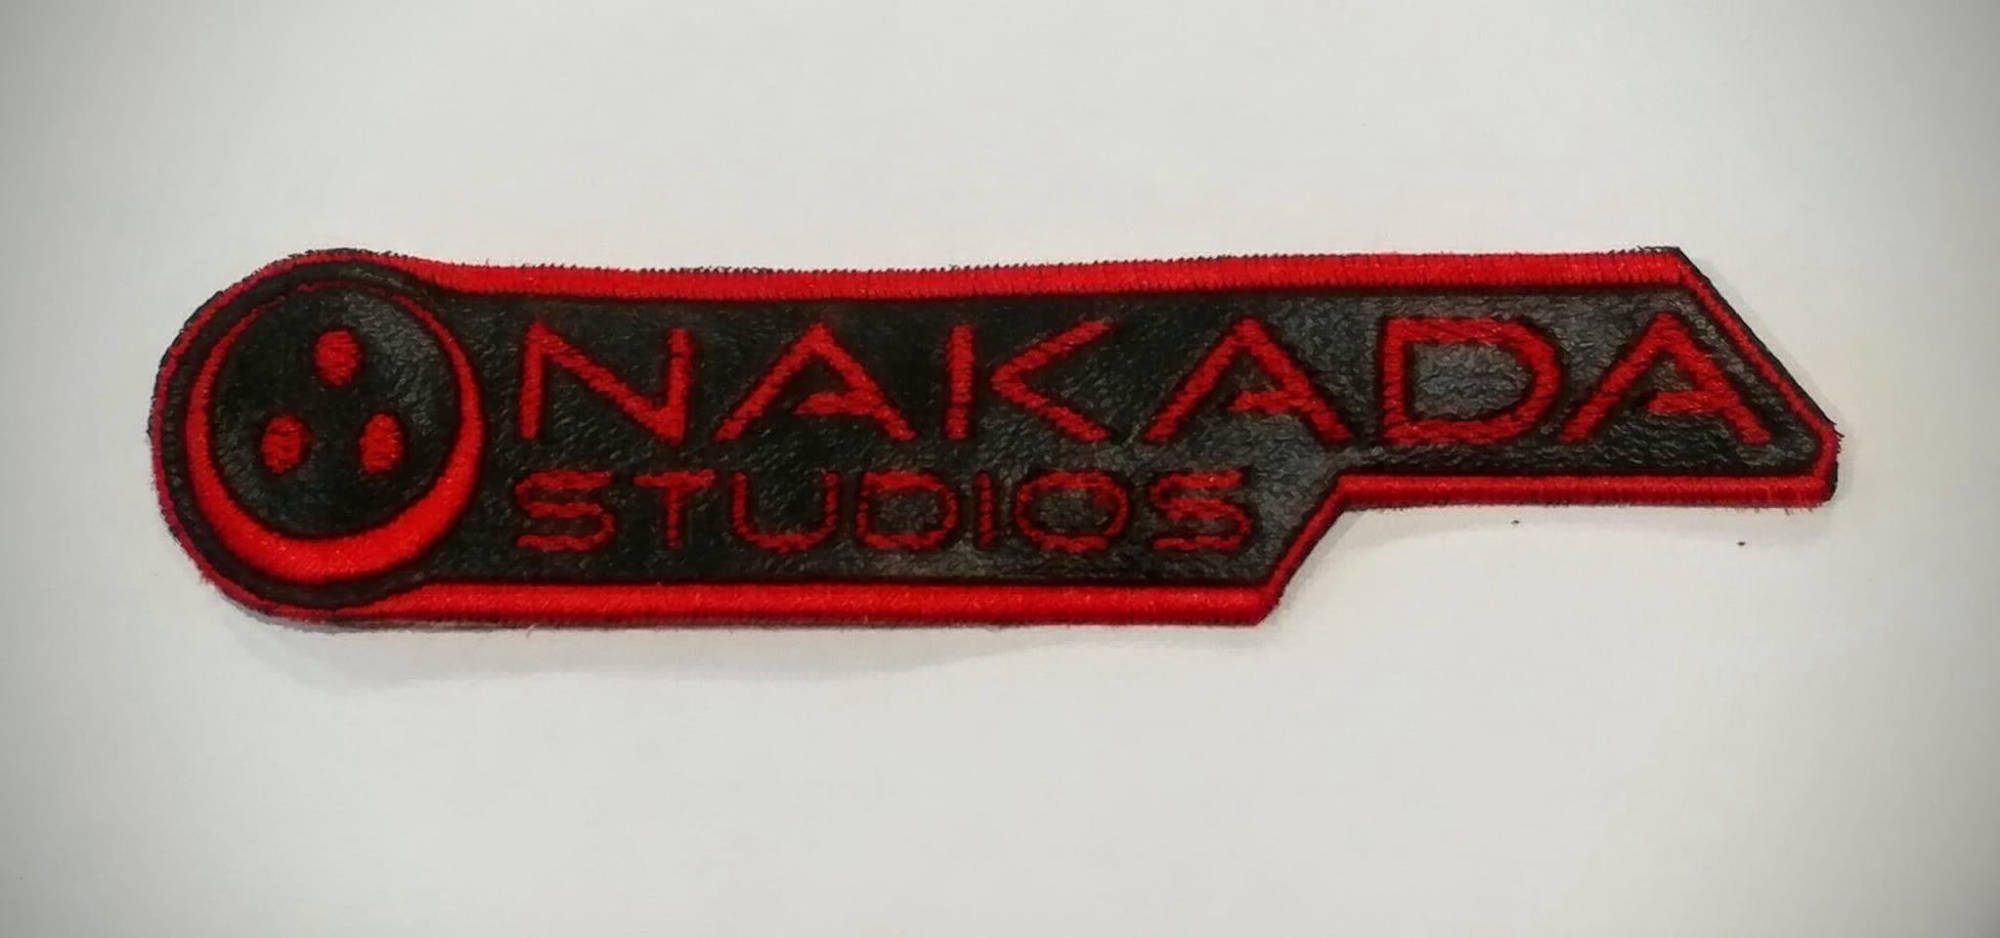 Nakada Studios Leatherette patch at nakadastudios.com